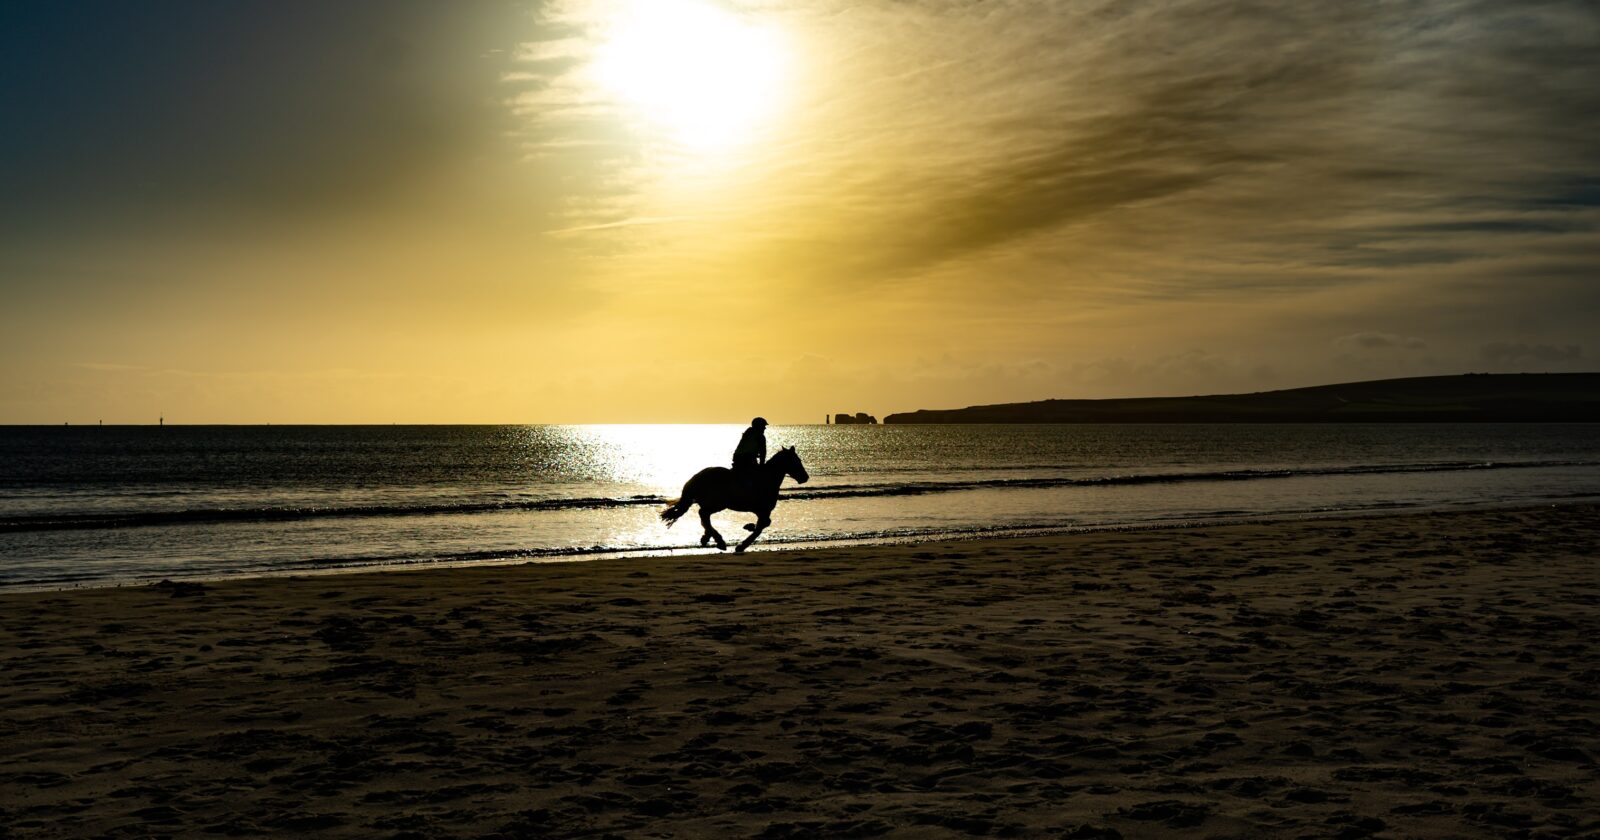 studland beach sunset horse riding